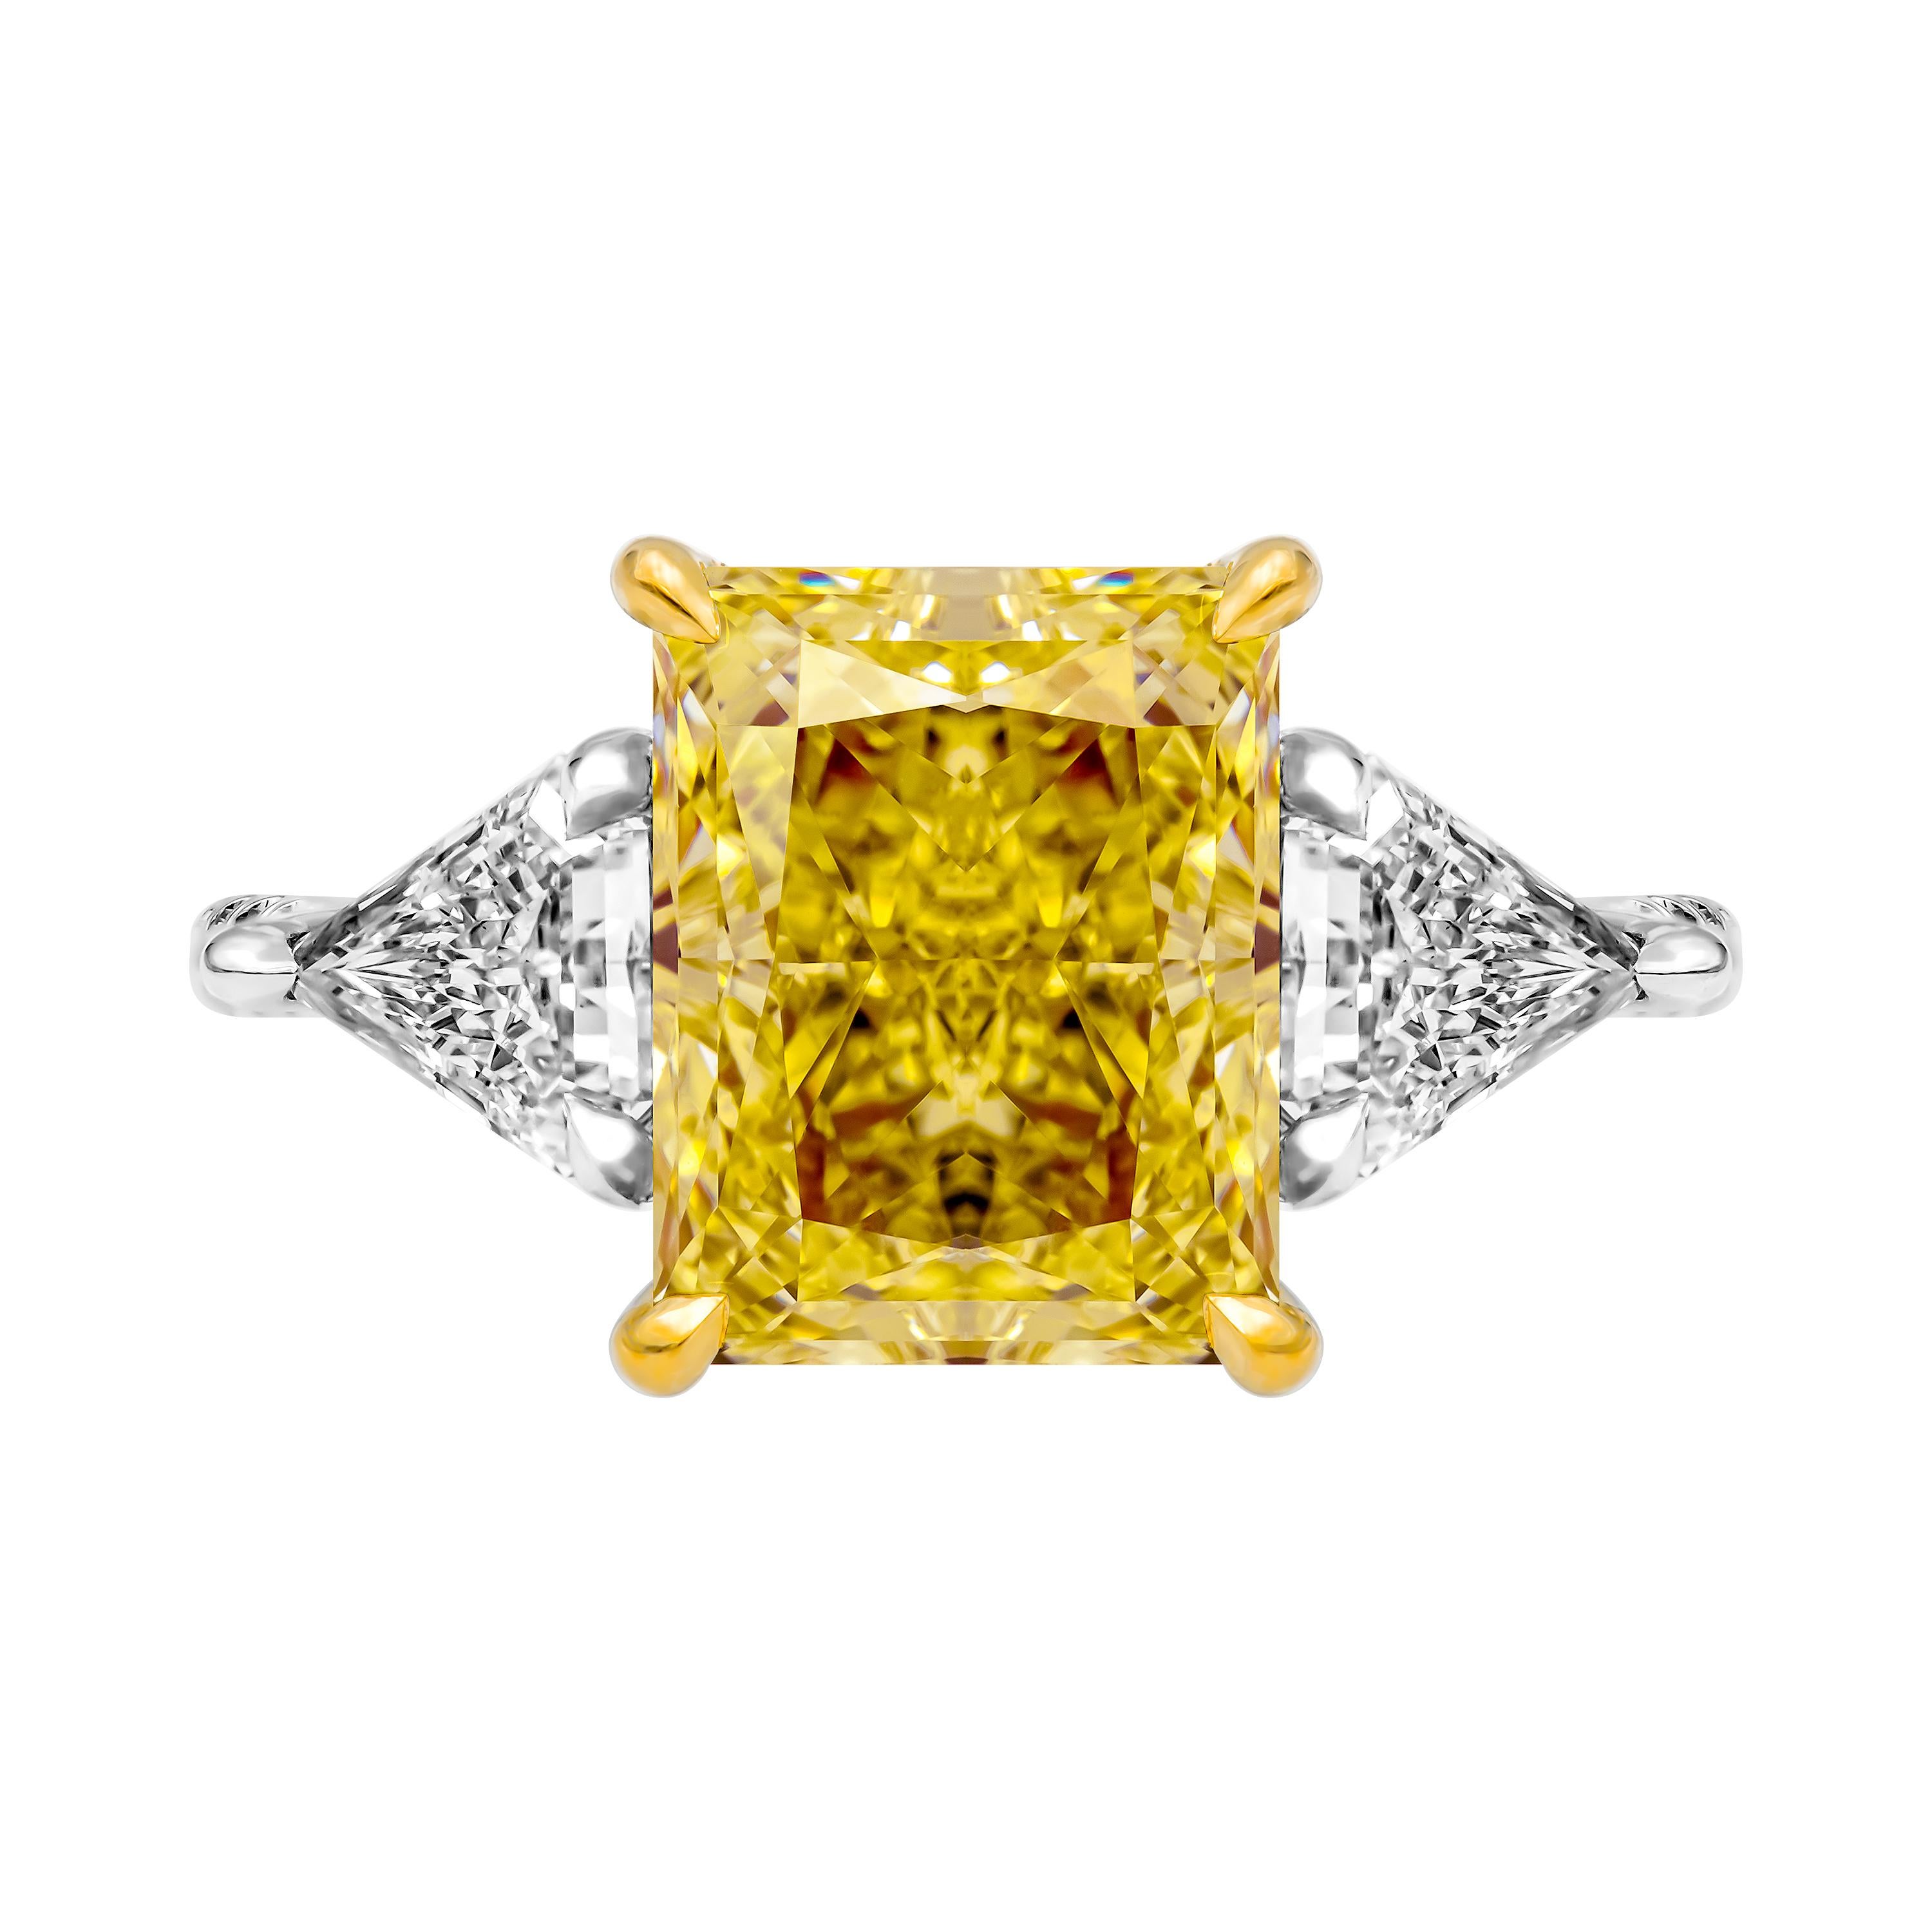 Art Deco GIA Certified 4.51 Carat Fancy Light Yellow Diamond Cocktail Ring